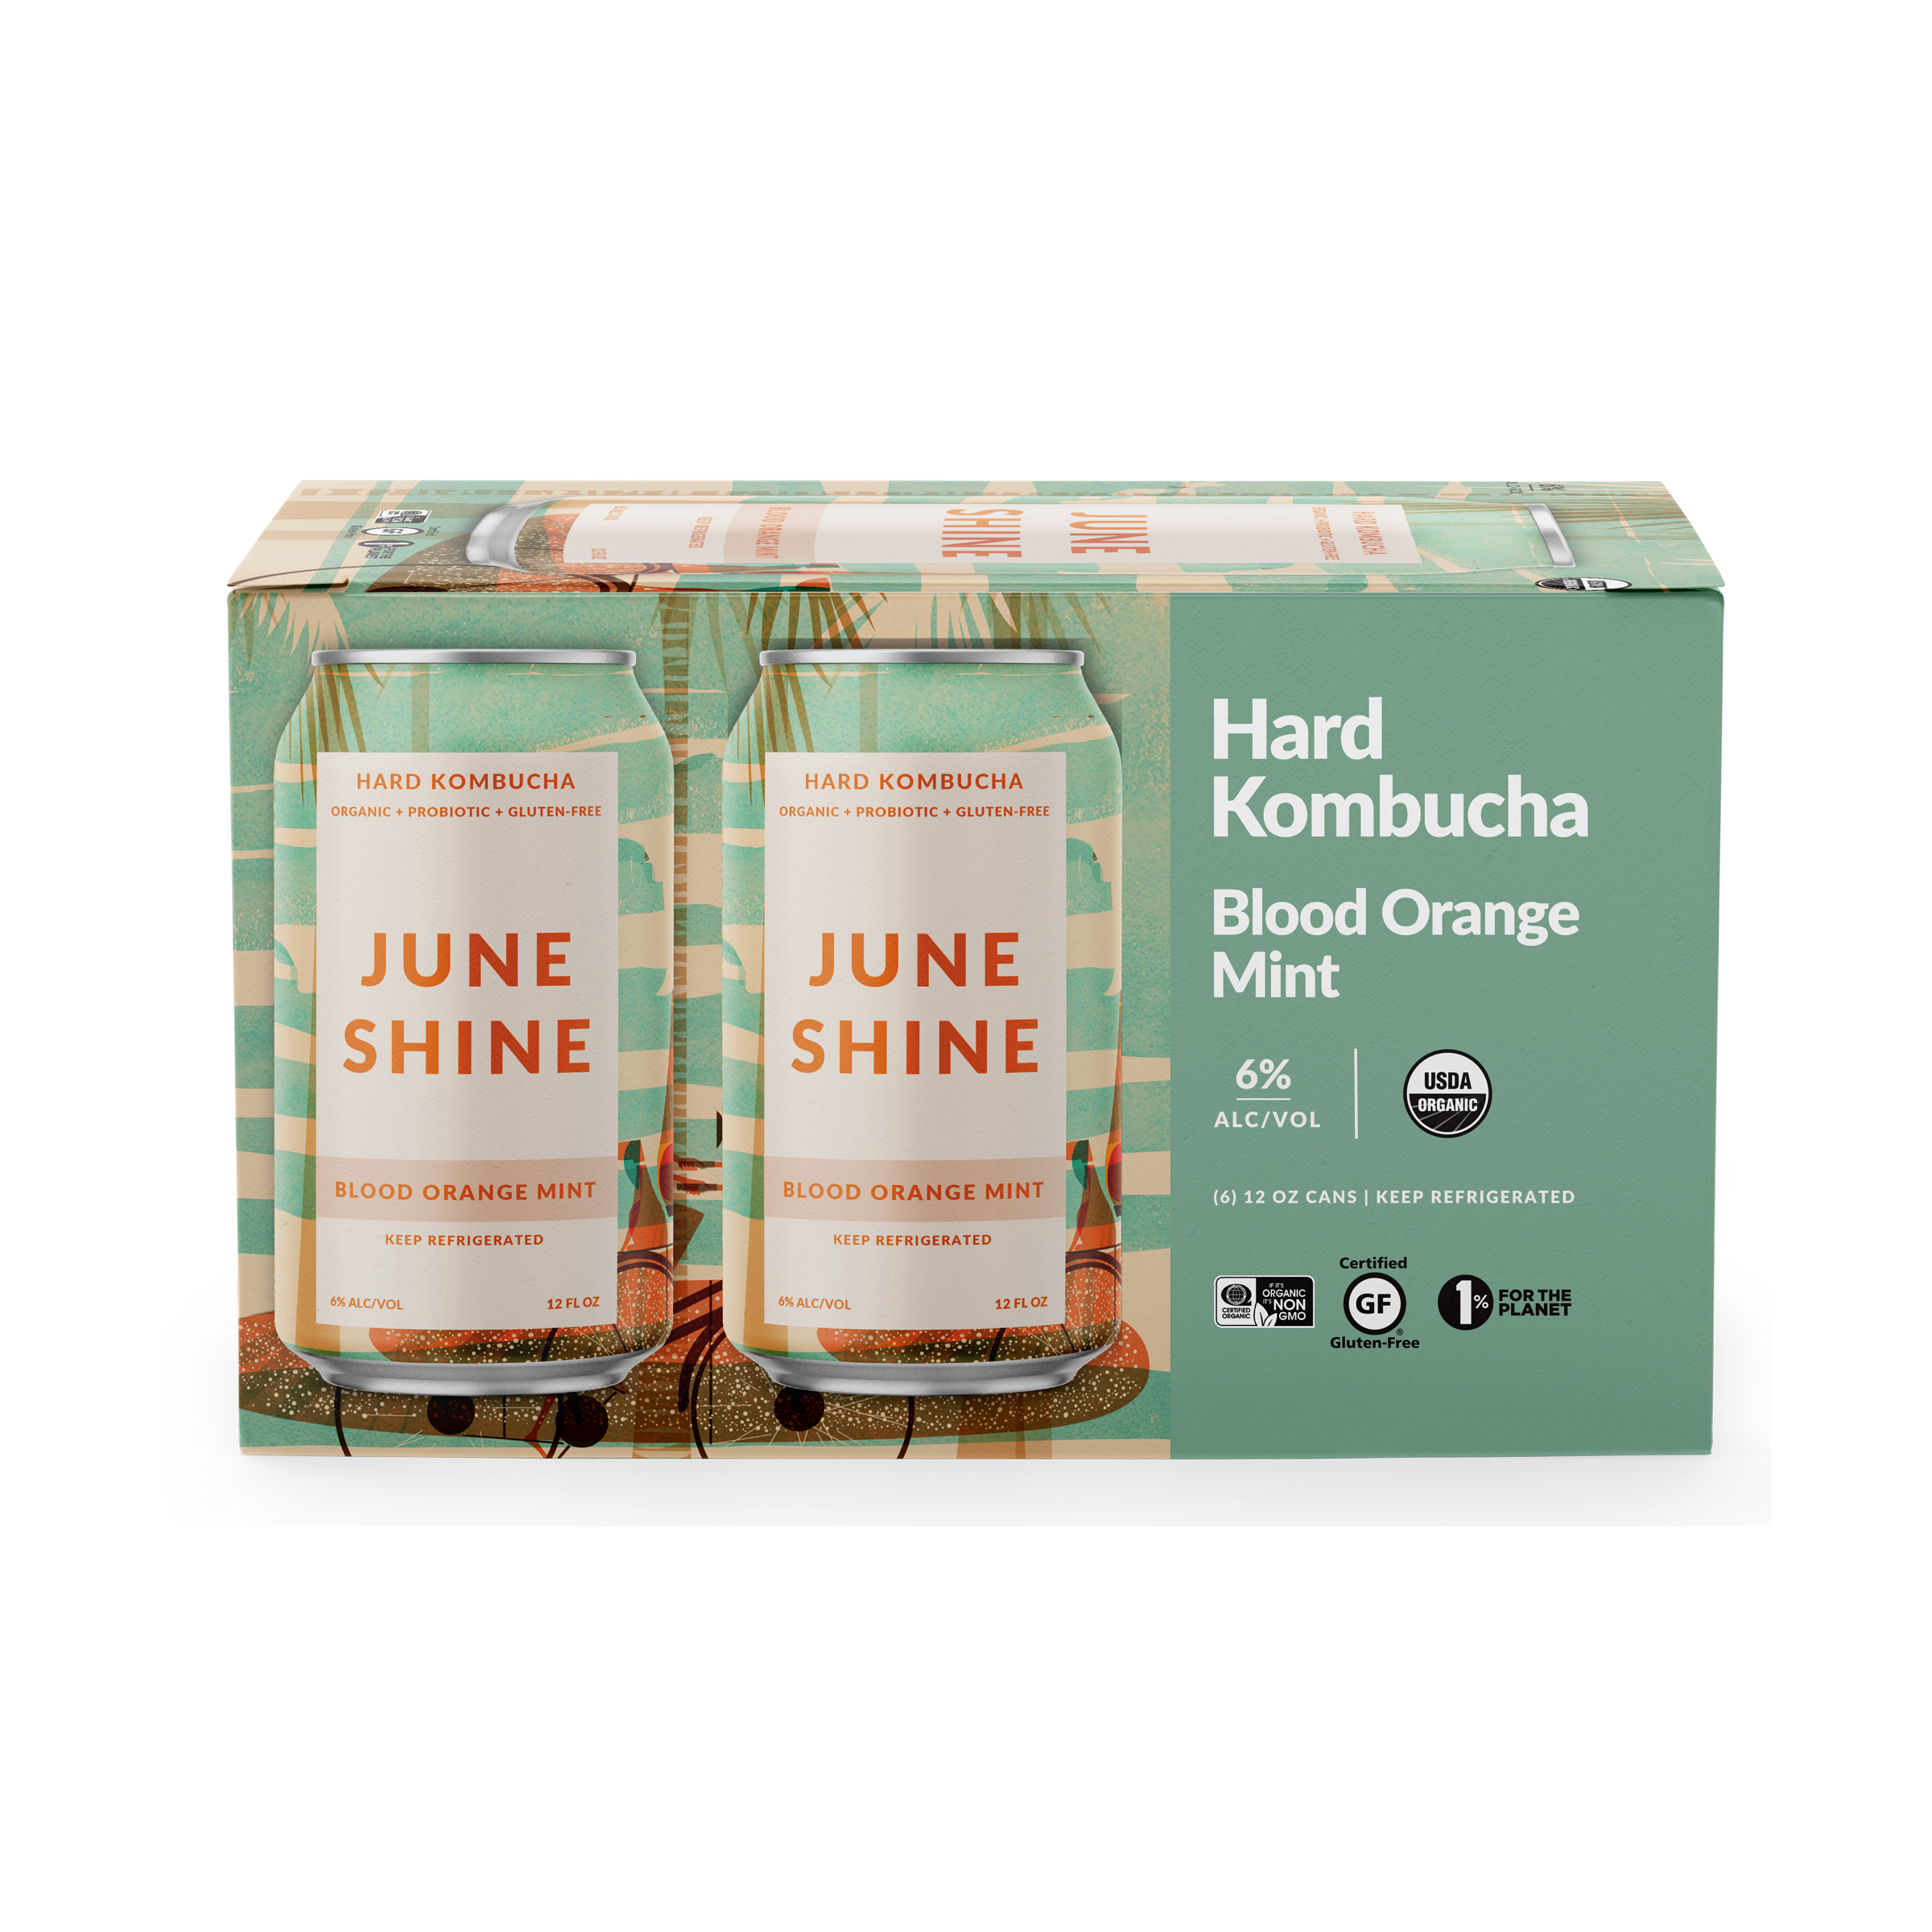 images/seasonal_wine/June Shine Blood Orange Mint.jpg